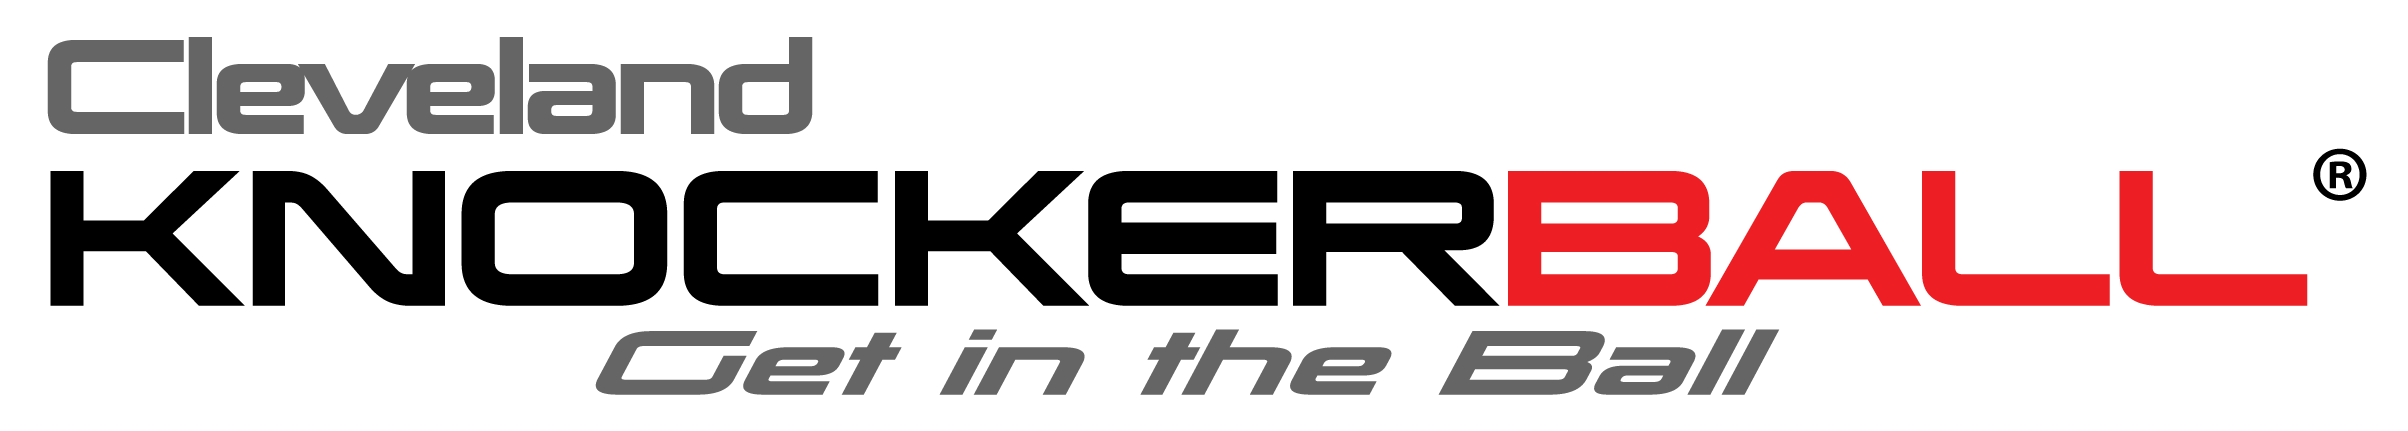 Cleveland Knockerball Owner Logo, Icon & Header individual files_Knockerball Medium Logo